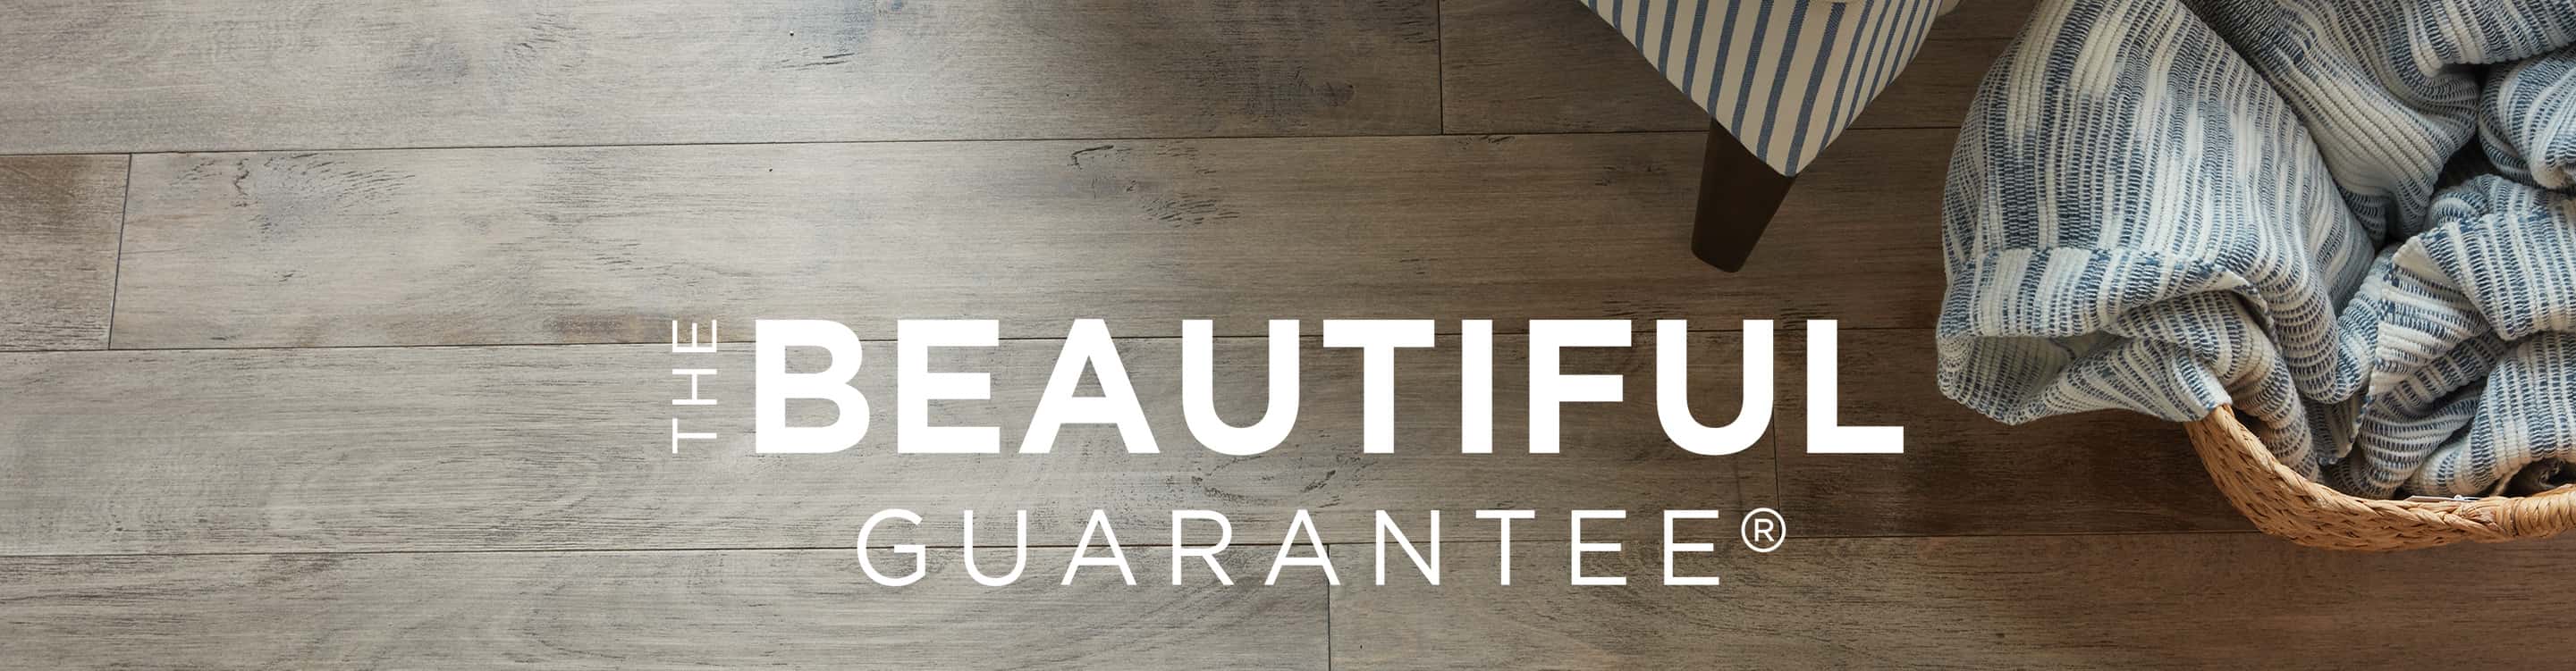 The Beautiful Guarantee flooring warranty 